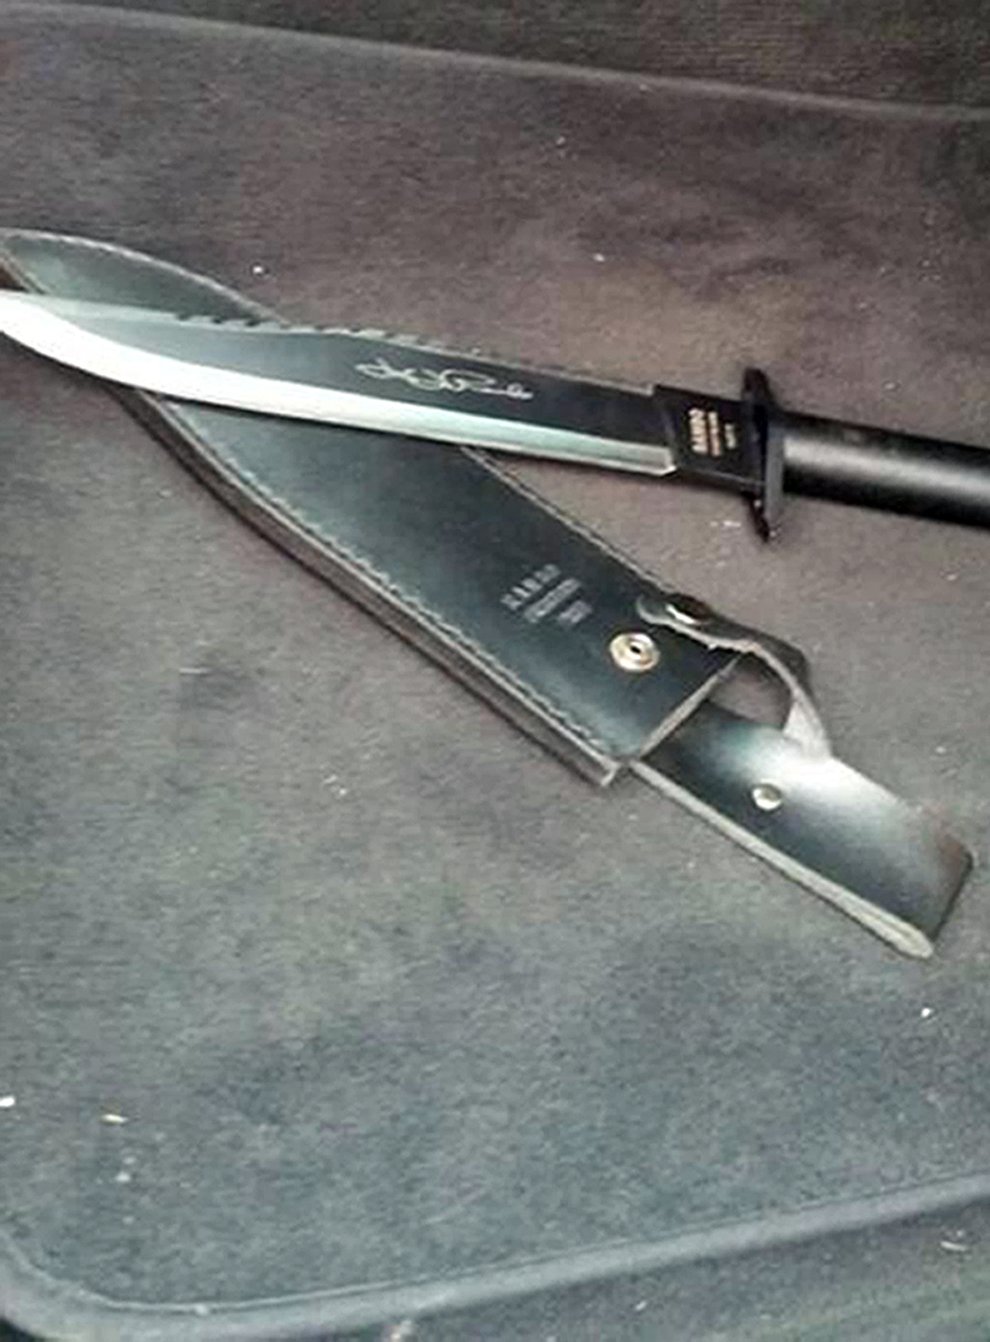 A Rambo knife